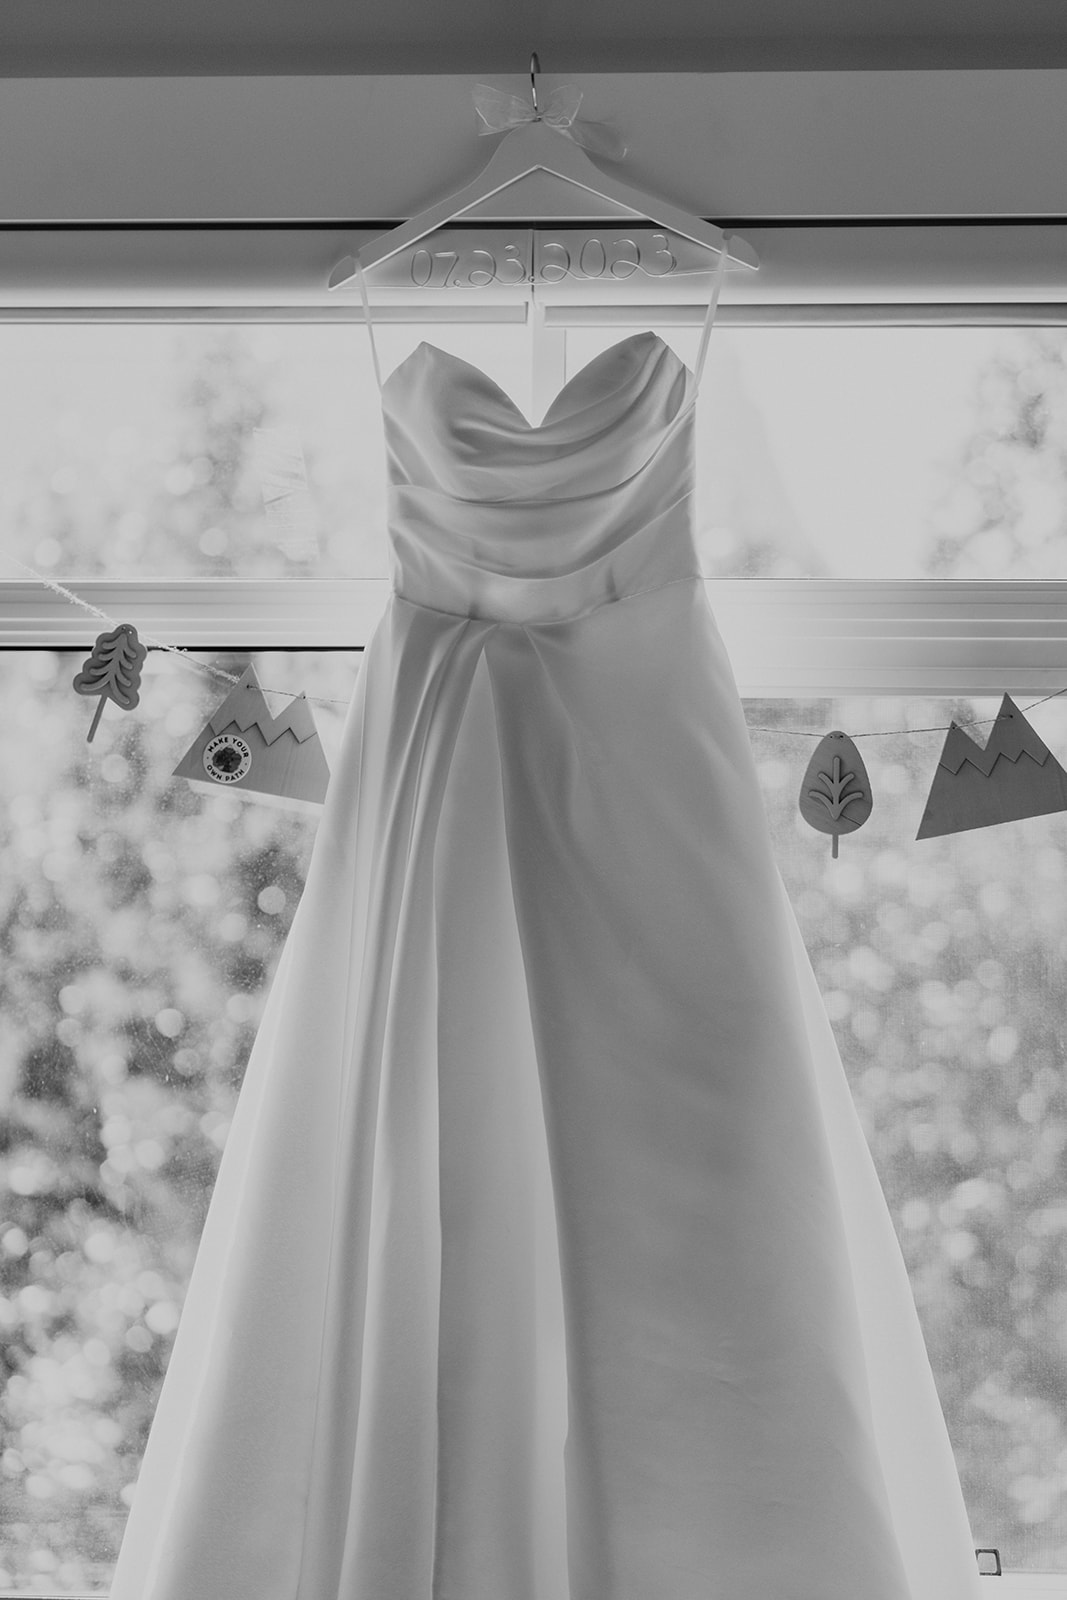 Black and white photo of strapless wedding dress